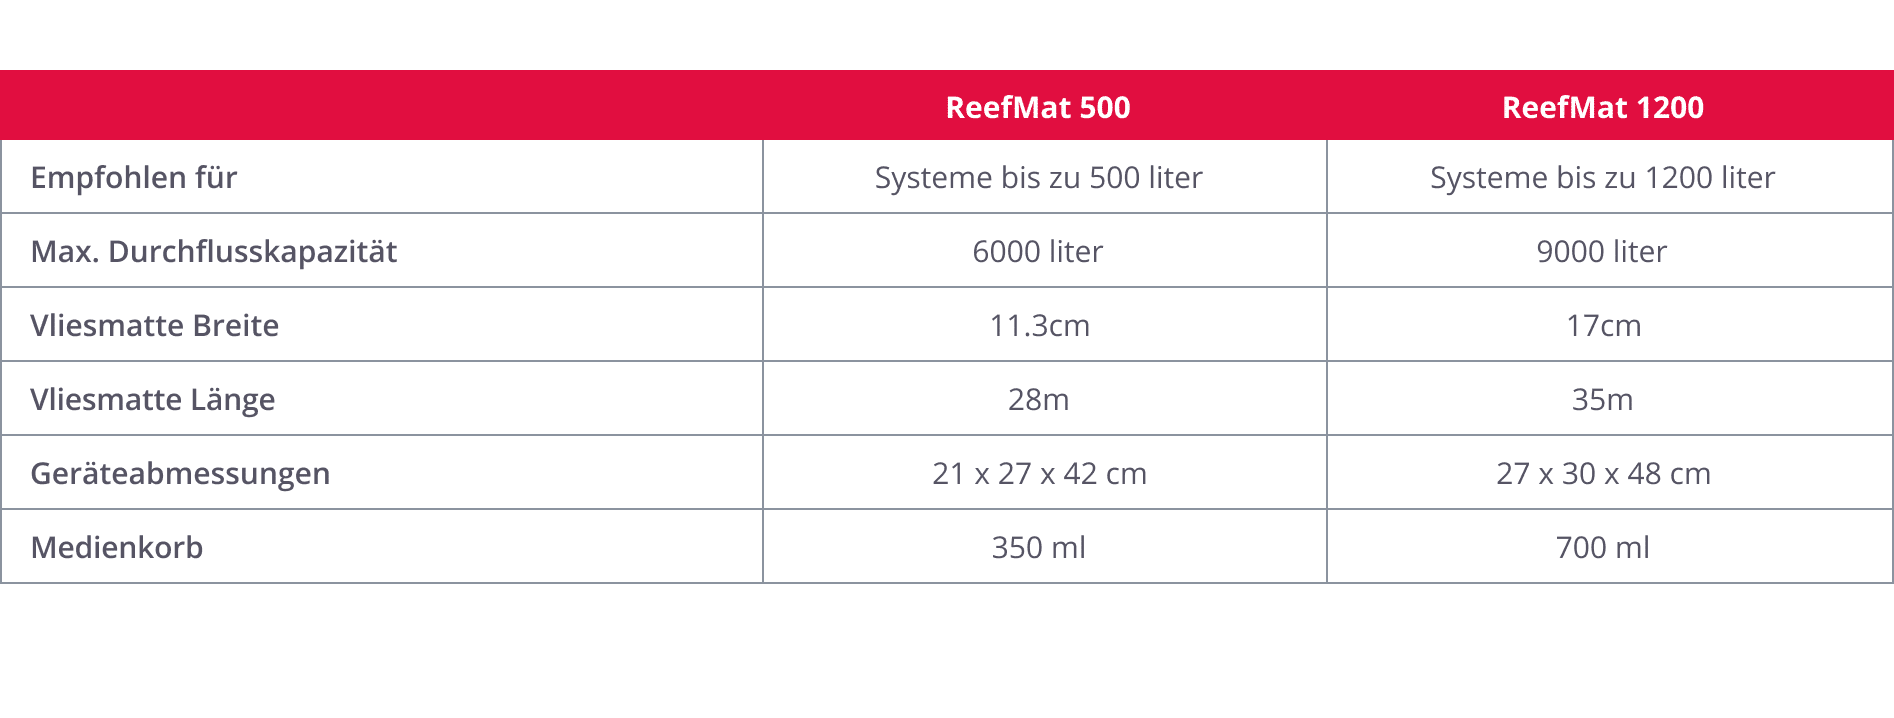 ReefMat 1200 (Incl. Cloud services)